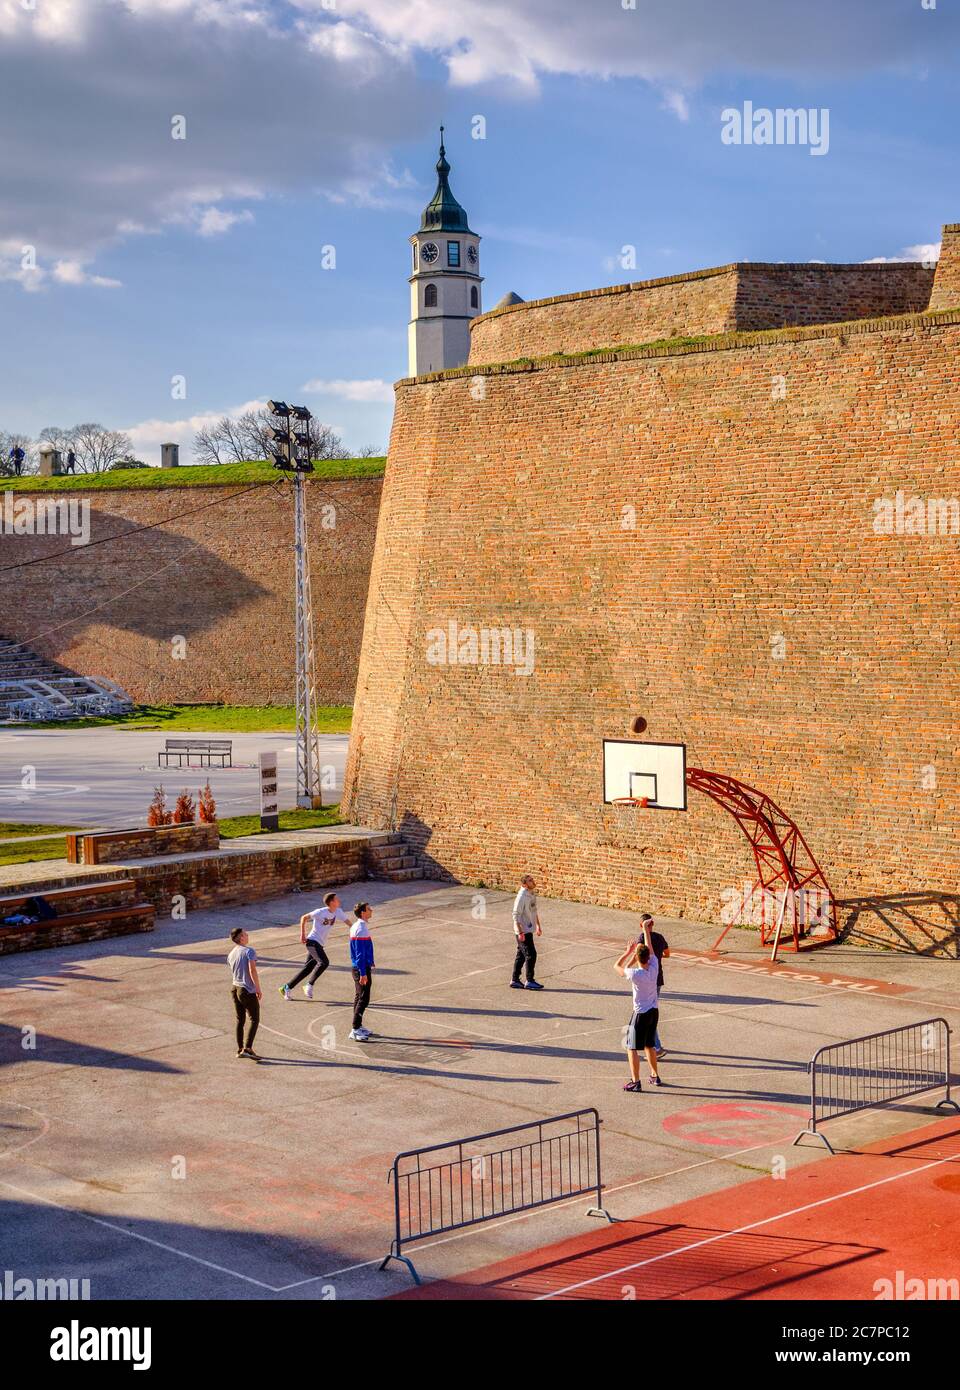 Belgrade / Serbia - February 22, 2020: Teenagers playing basketball at basketball court in Belgrade fortress (Kalemegdan park) Stock Photo